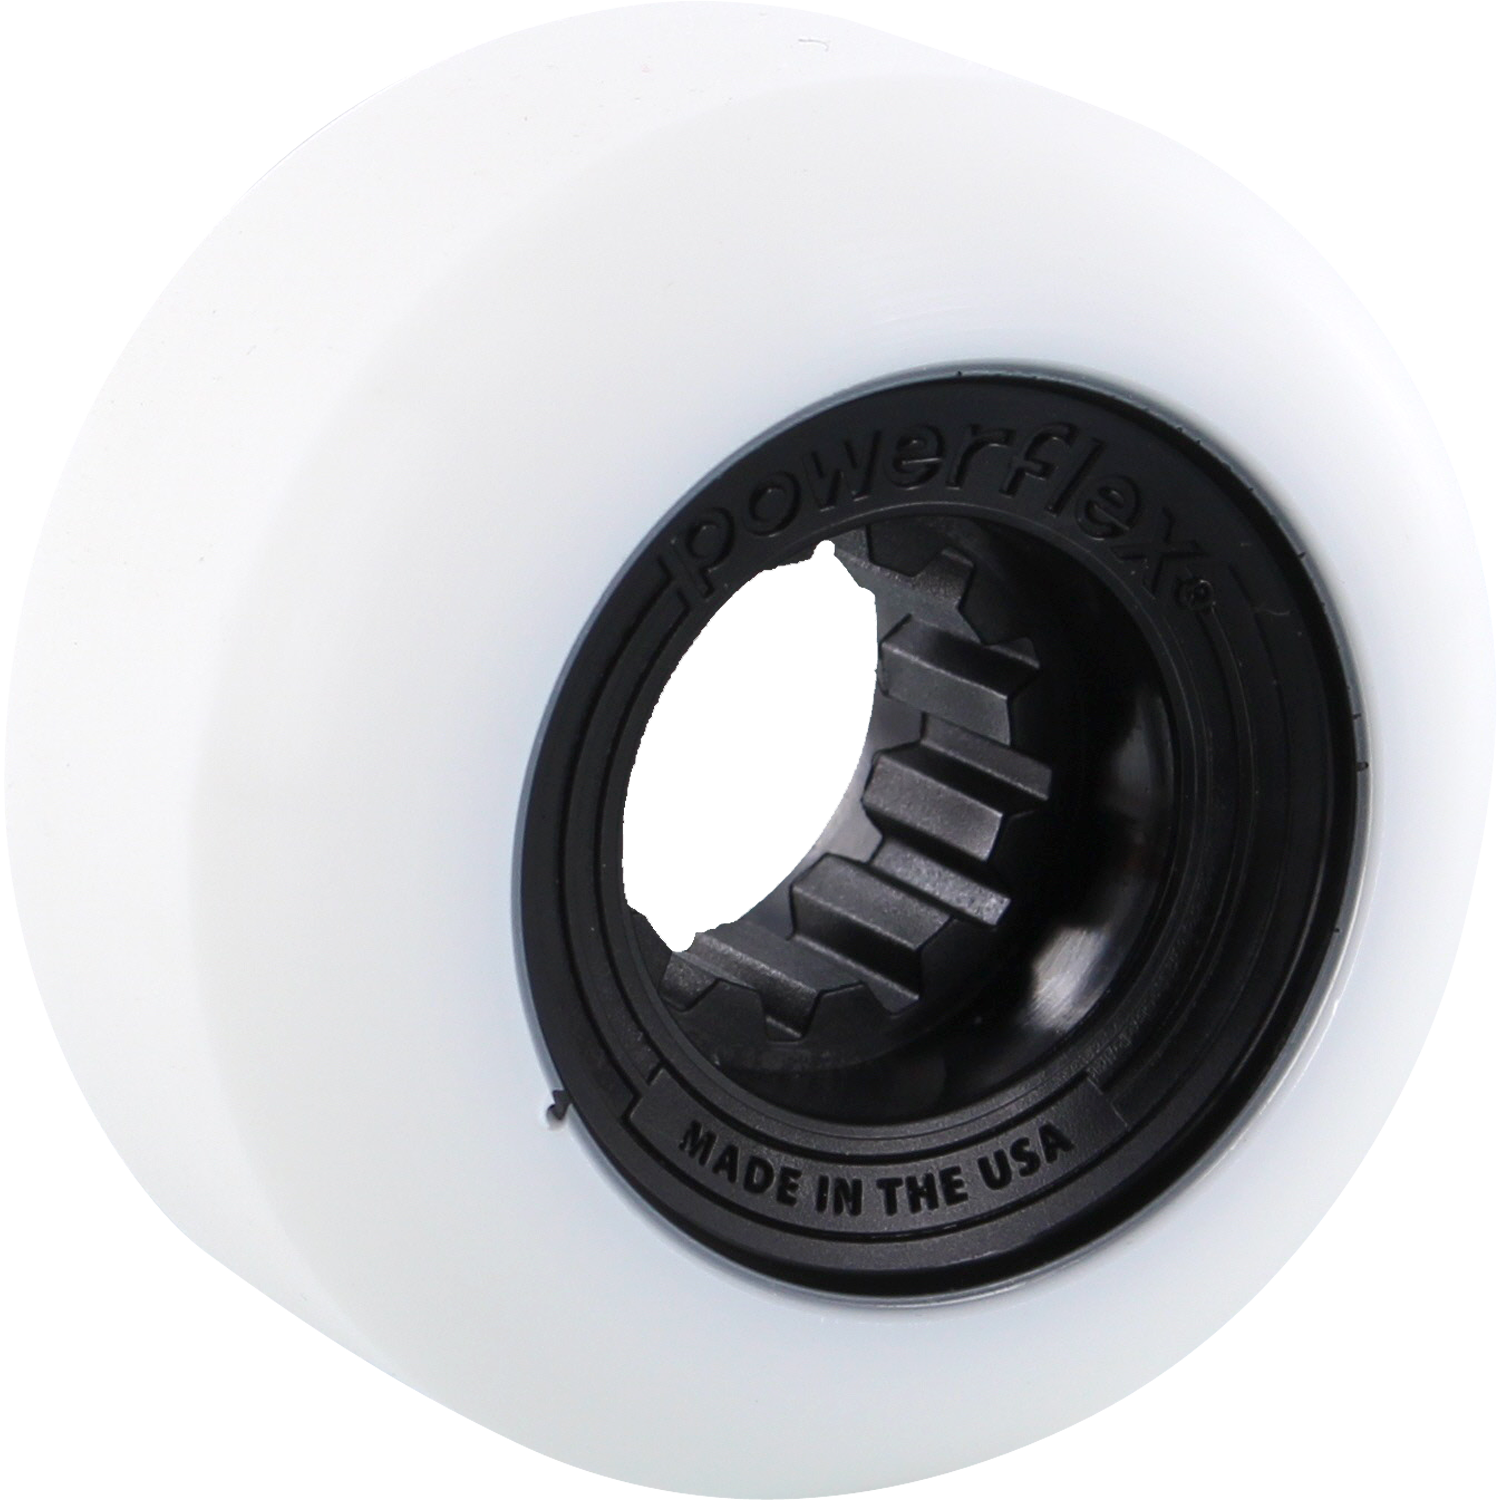 Powerflex Gumball 54mm 83b White/Black Skateboard Wheels (Set of 4)